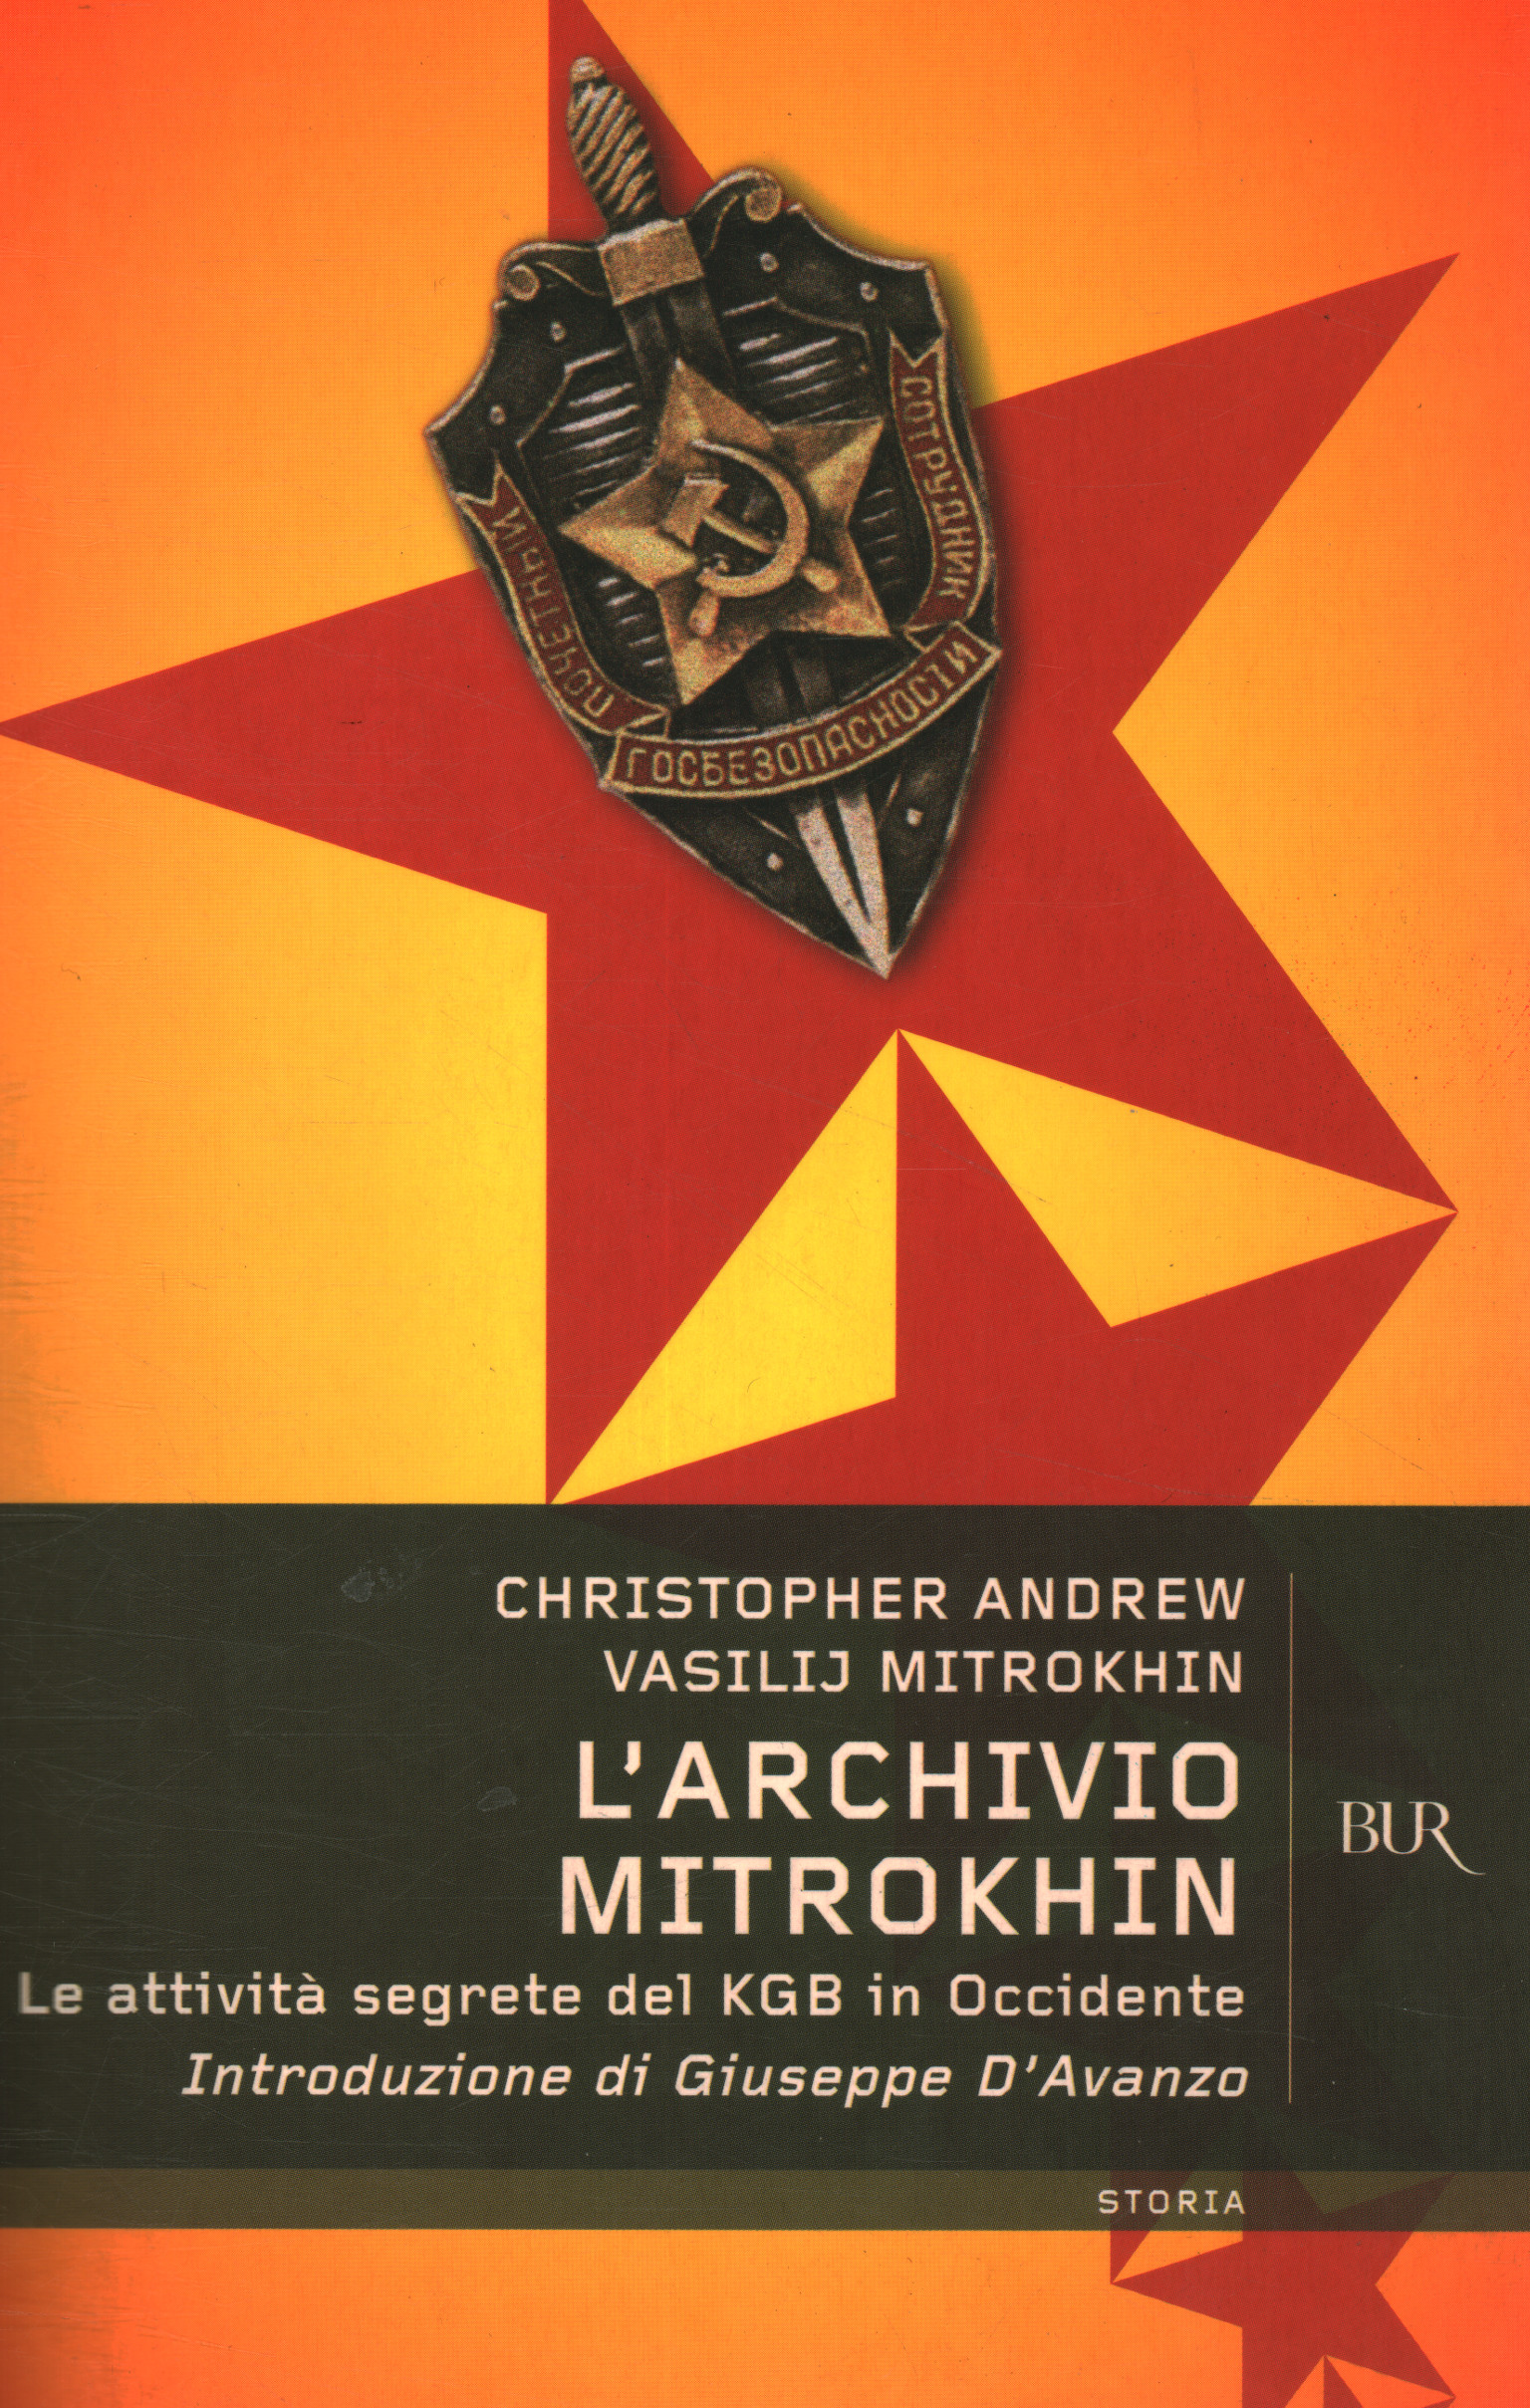 El archivo Mitrokhin